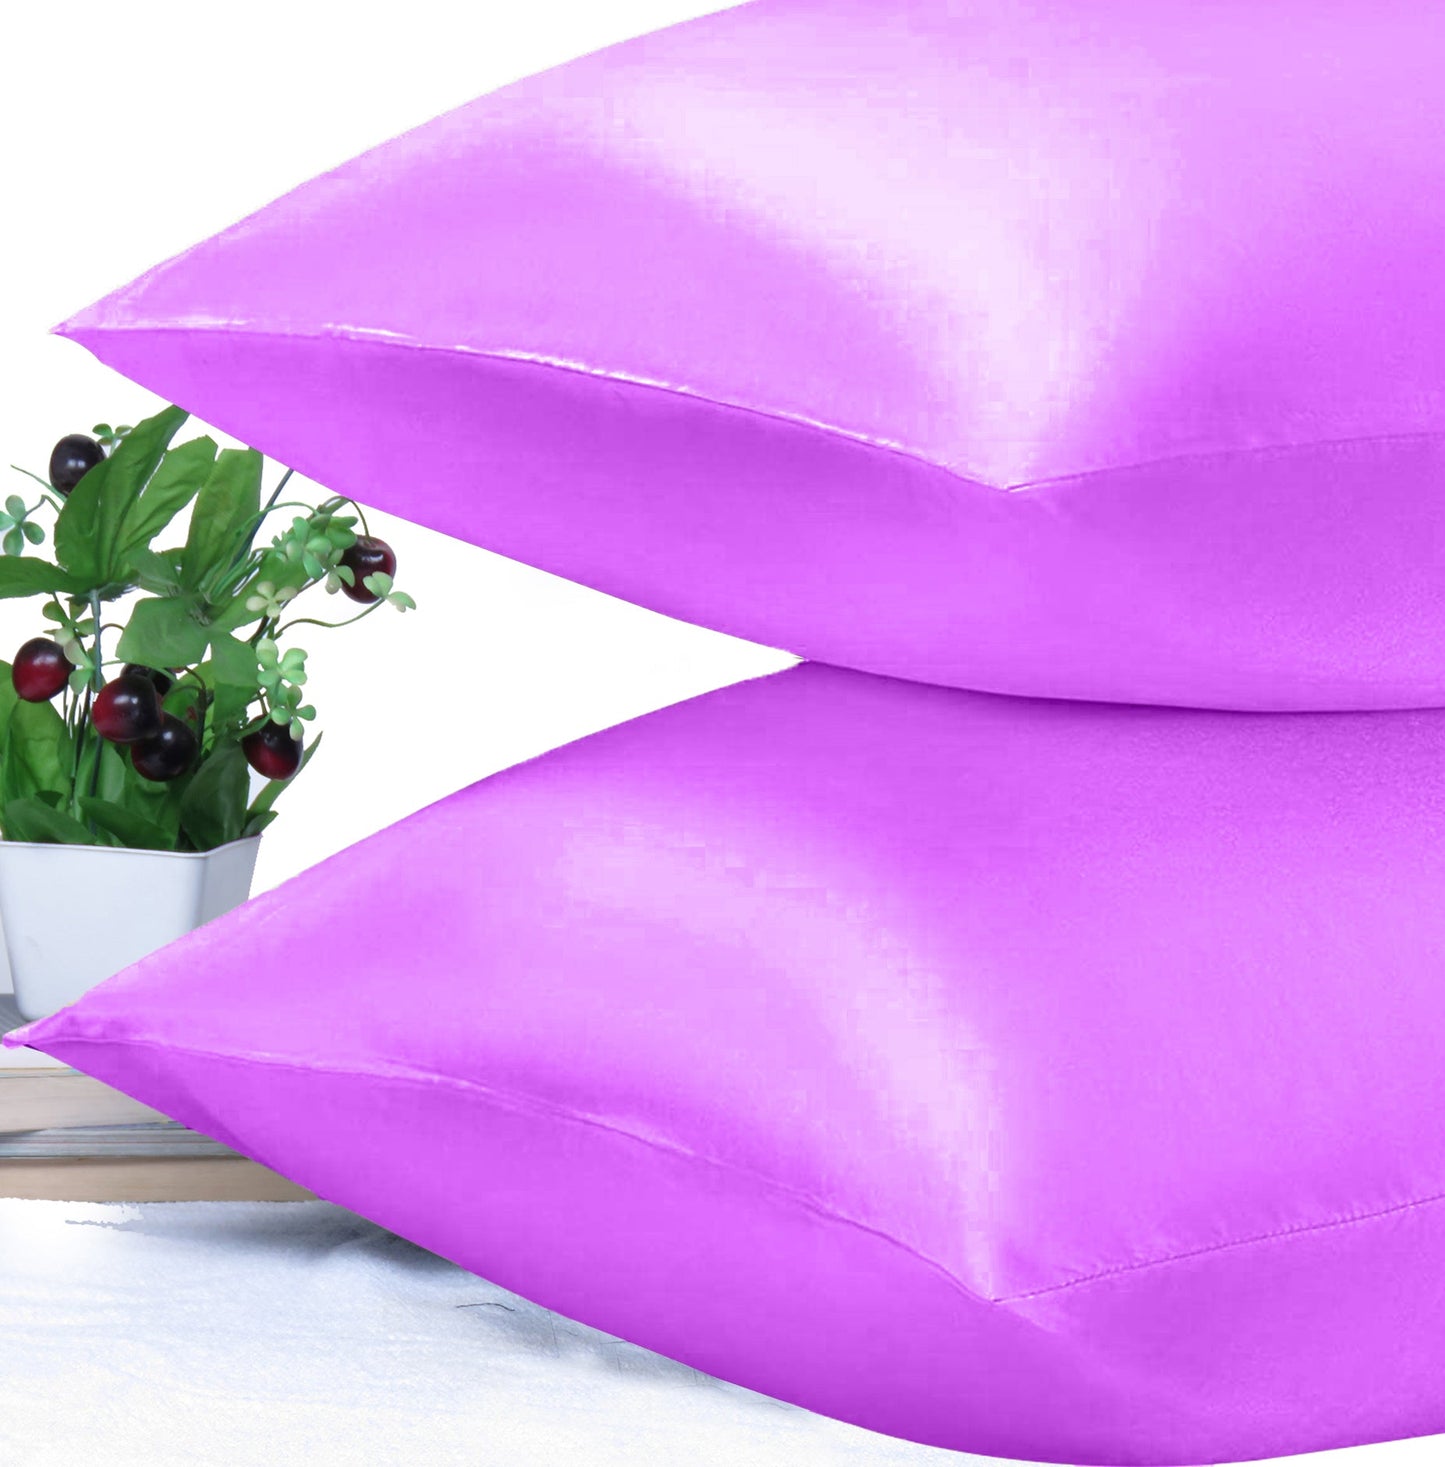 Luxury Soft Plain Satin Silk Pillowcases in Set of 2 - Hyacinth Violet